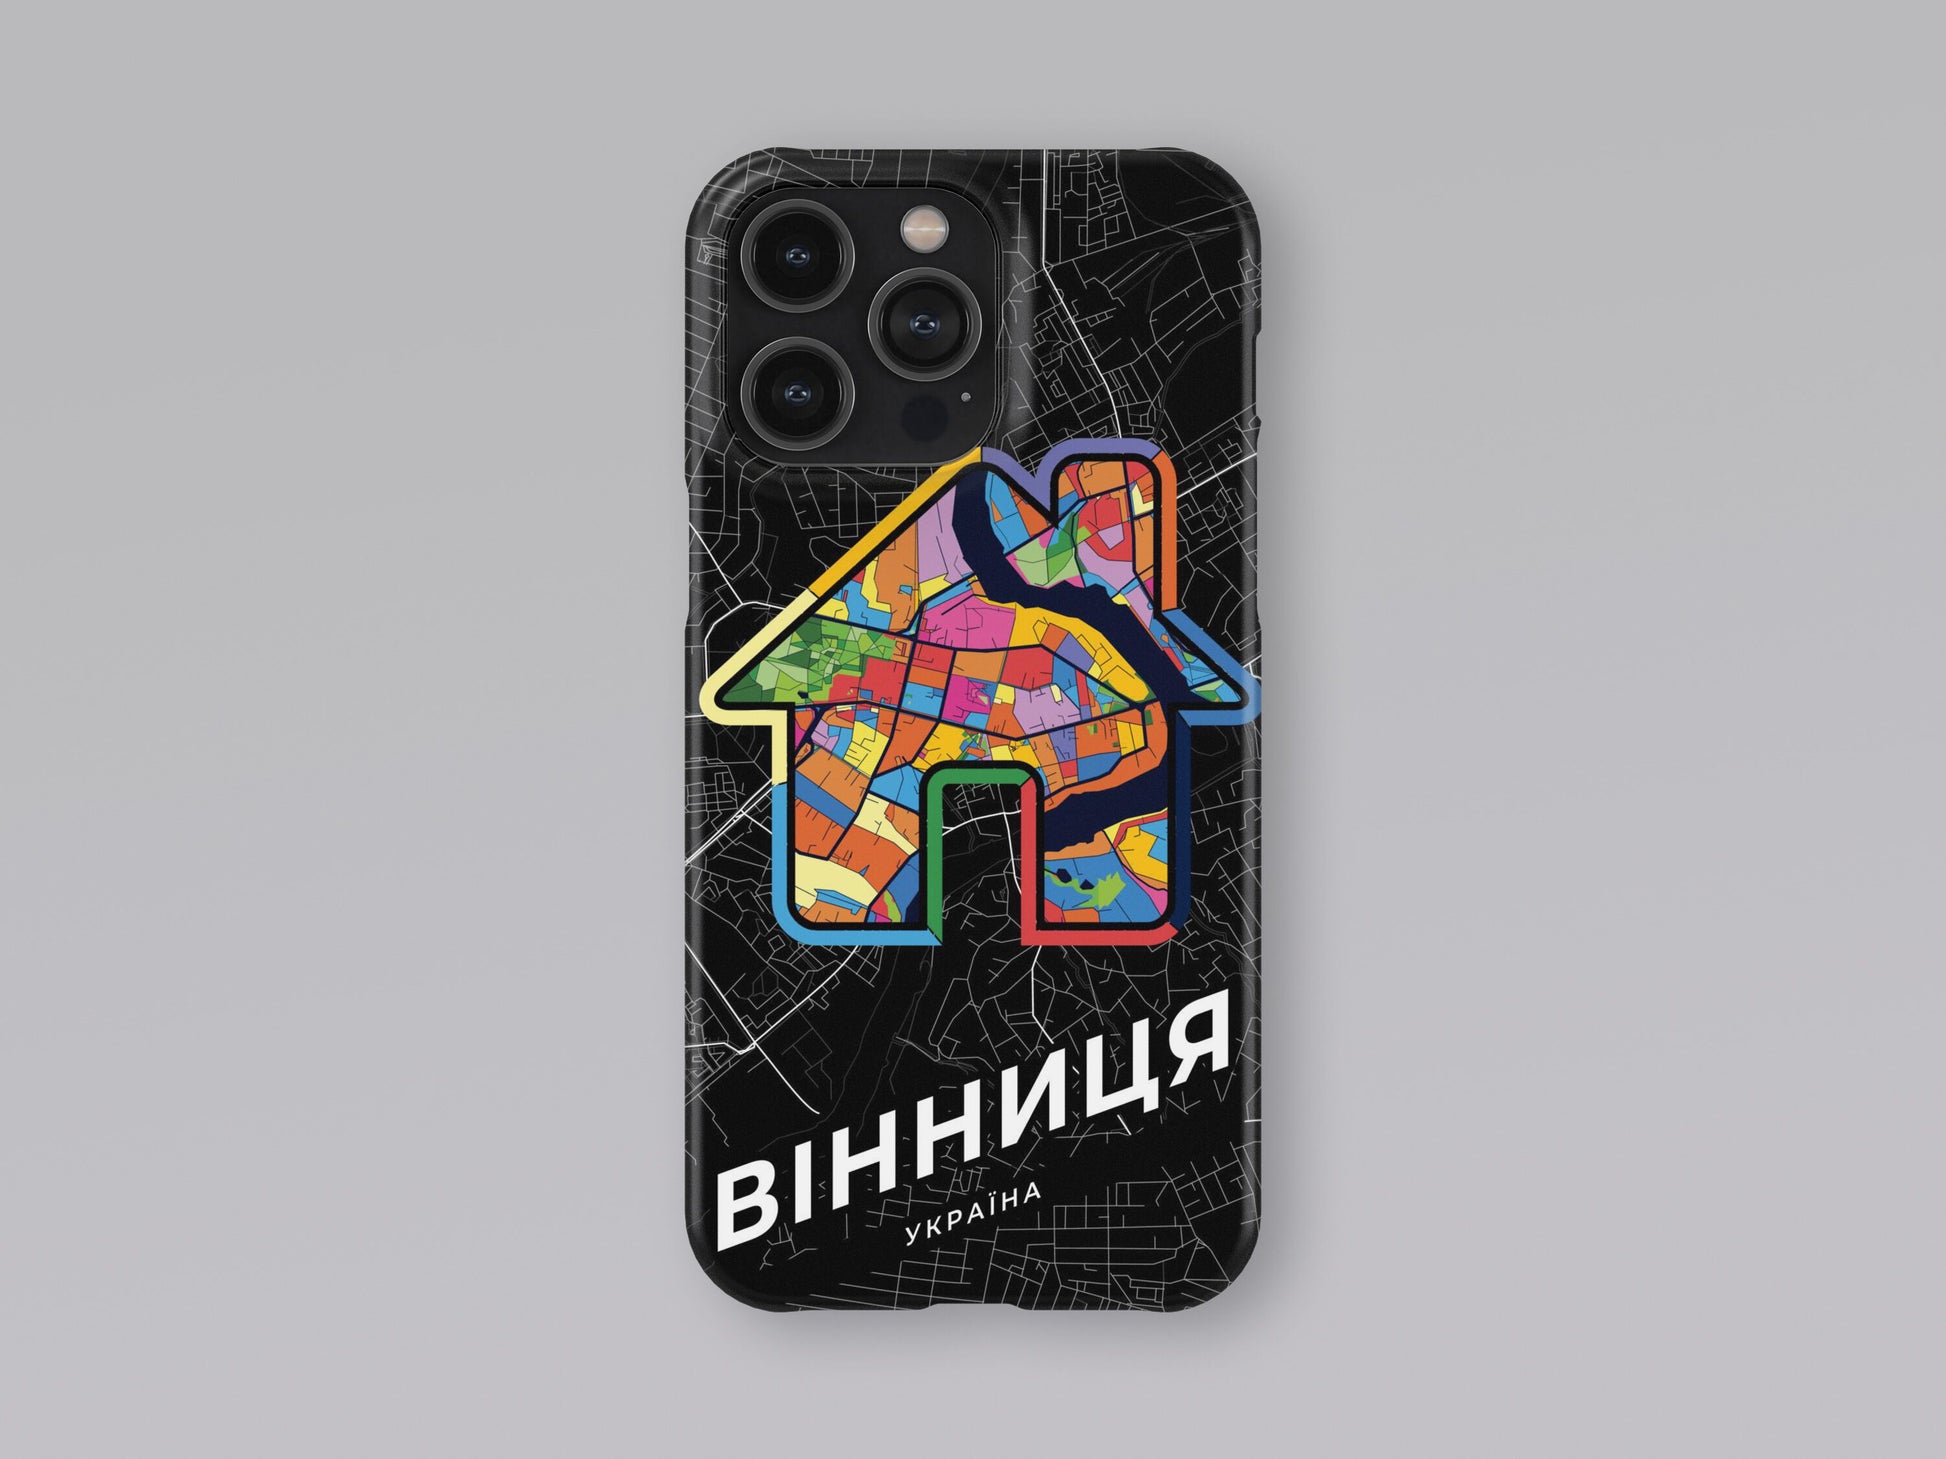 Vinnytsia Ukraine slim phone case with colorful icon 3